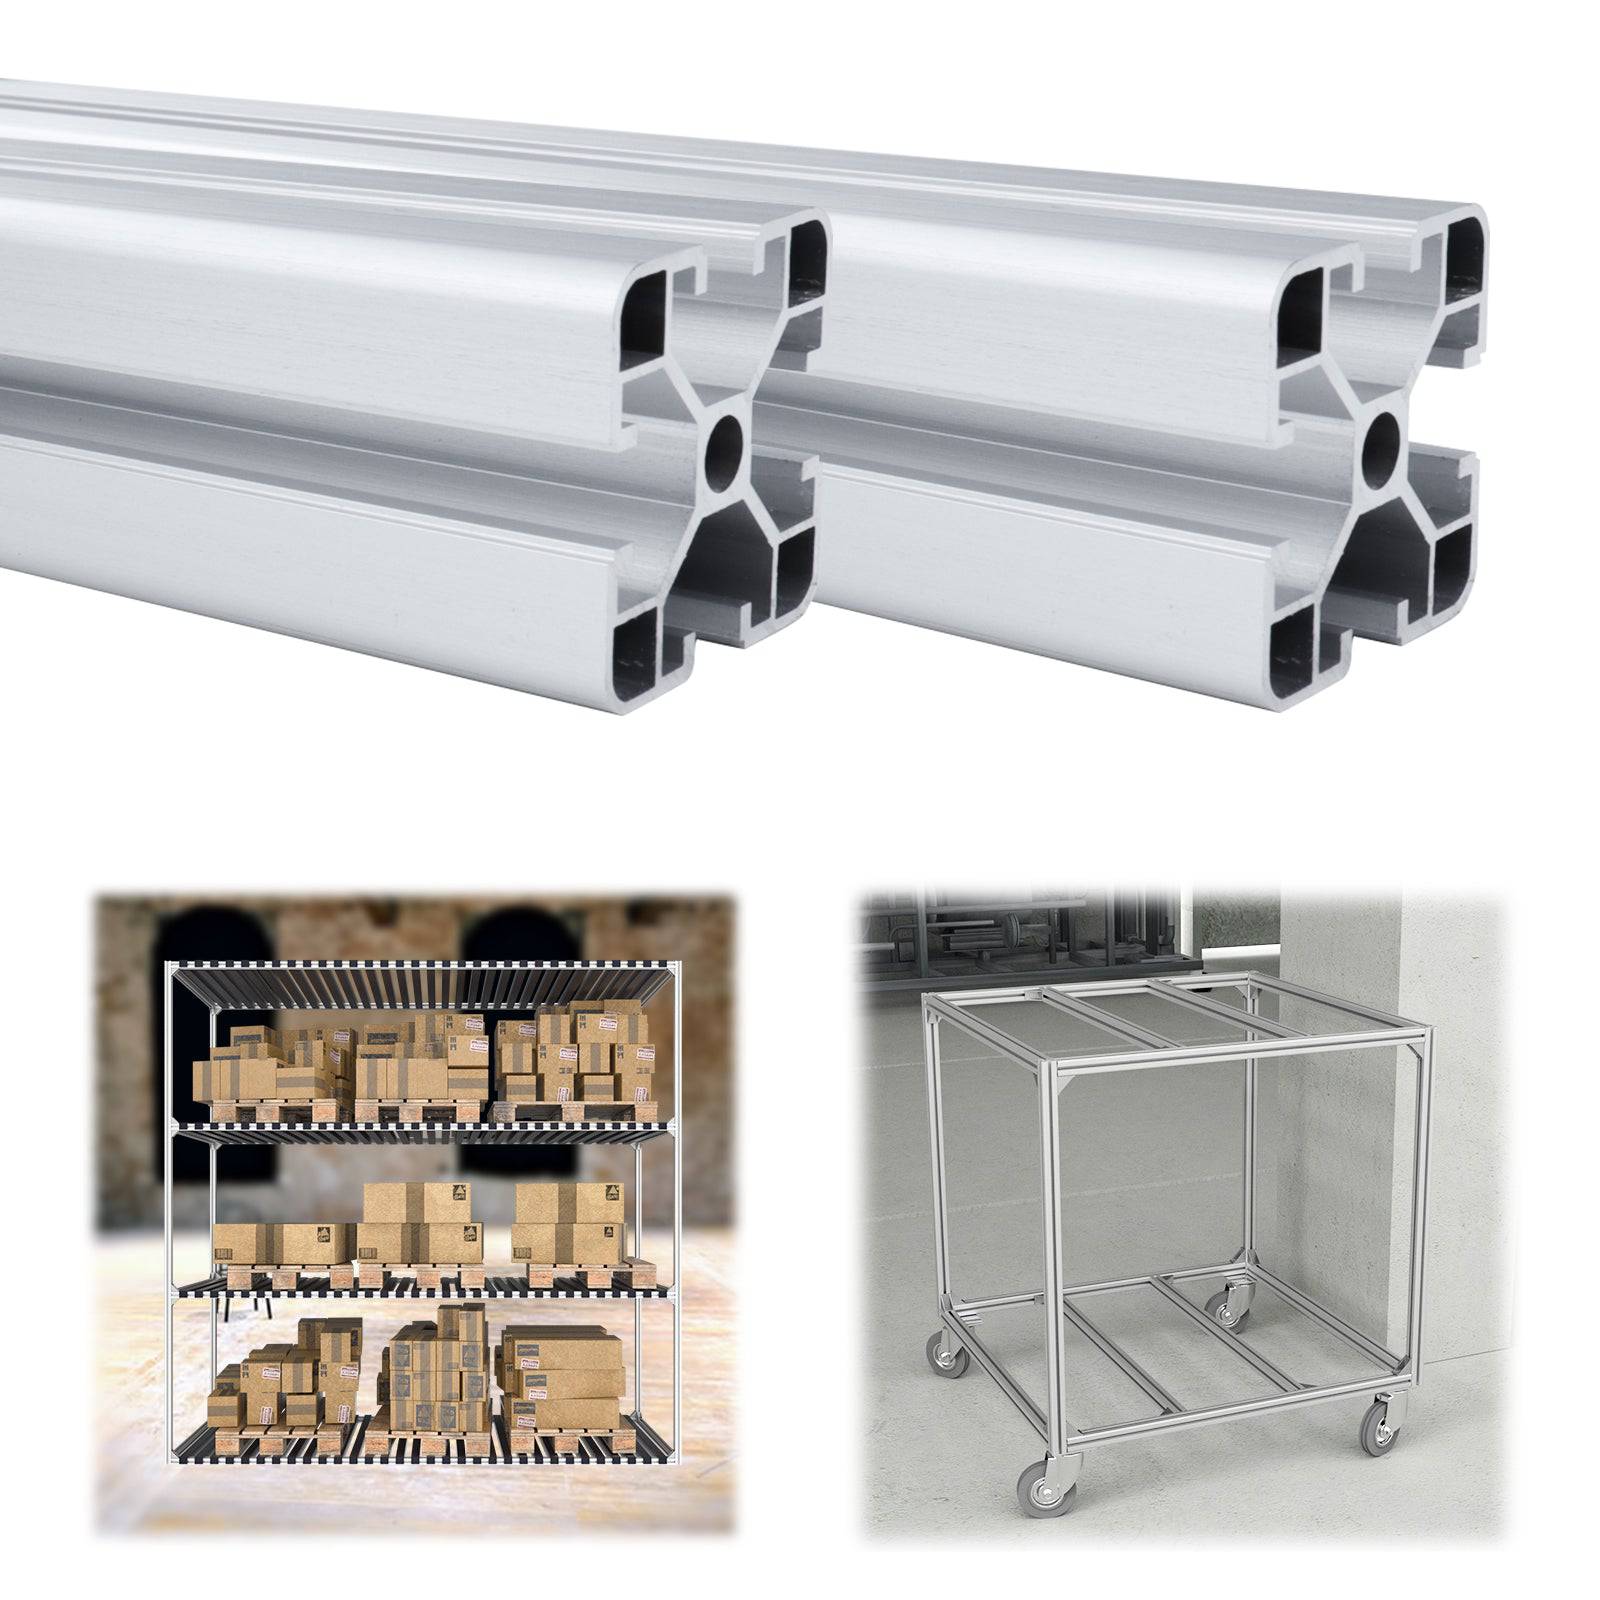 Muzata T Slot 2020 Aluminum Extrusion European Standard Anodized Silver Linear Rail, AP01 - Muzata